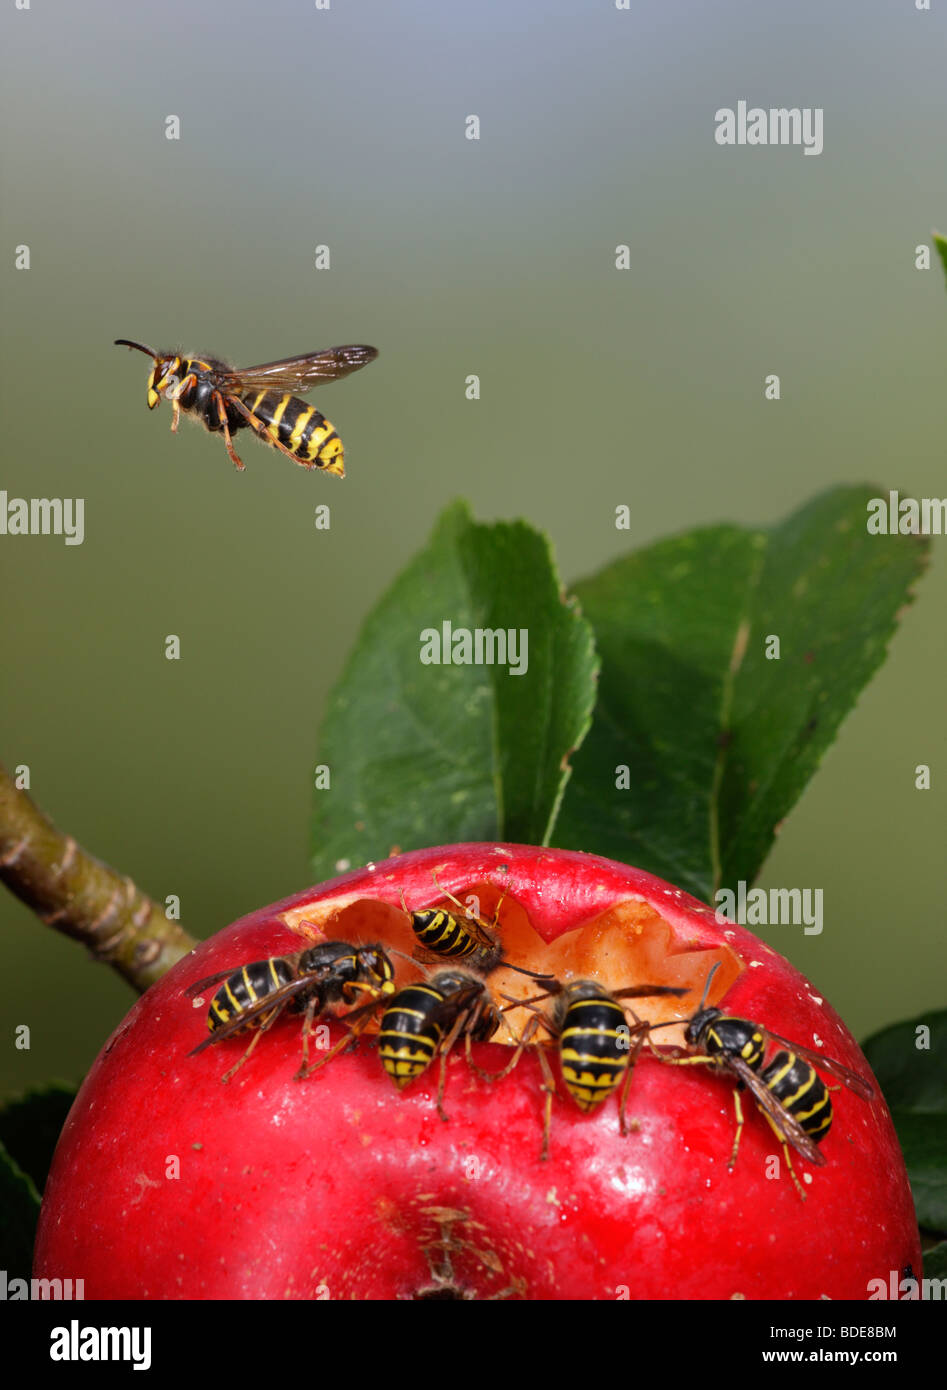 Median wasps Dolichovespula media and Common wasps Vespula vulgaris feeding on fallen apple Stock Photo